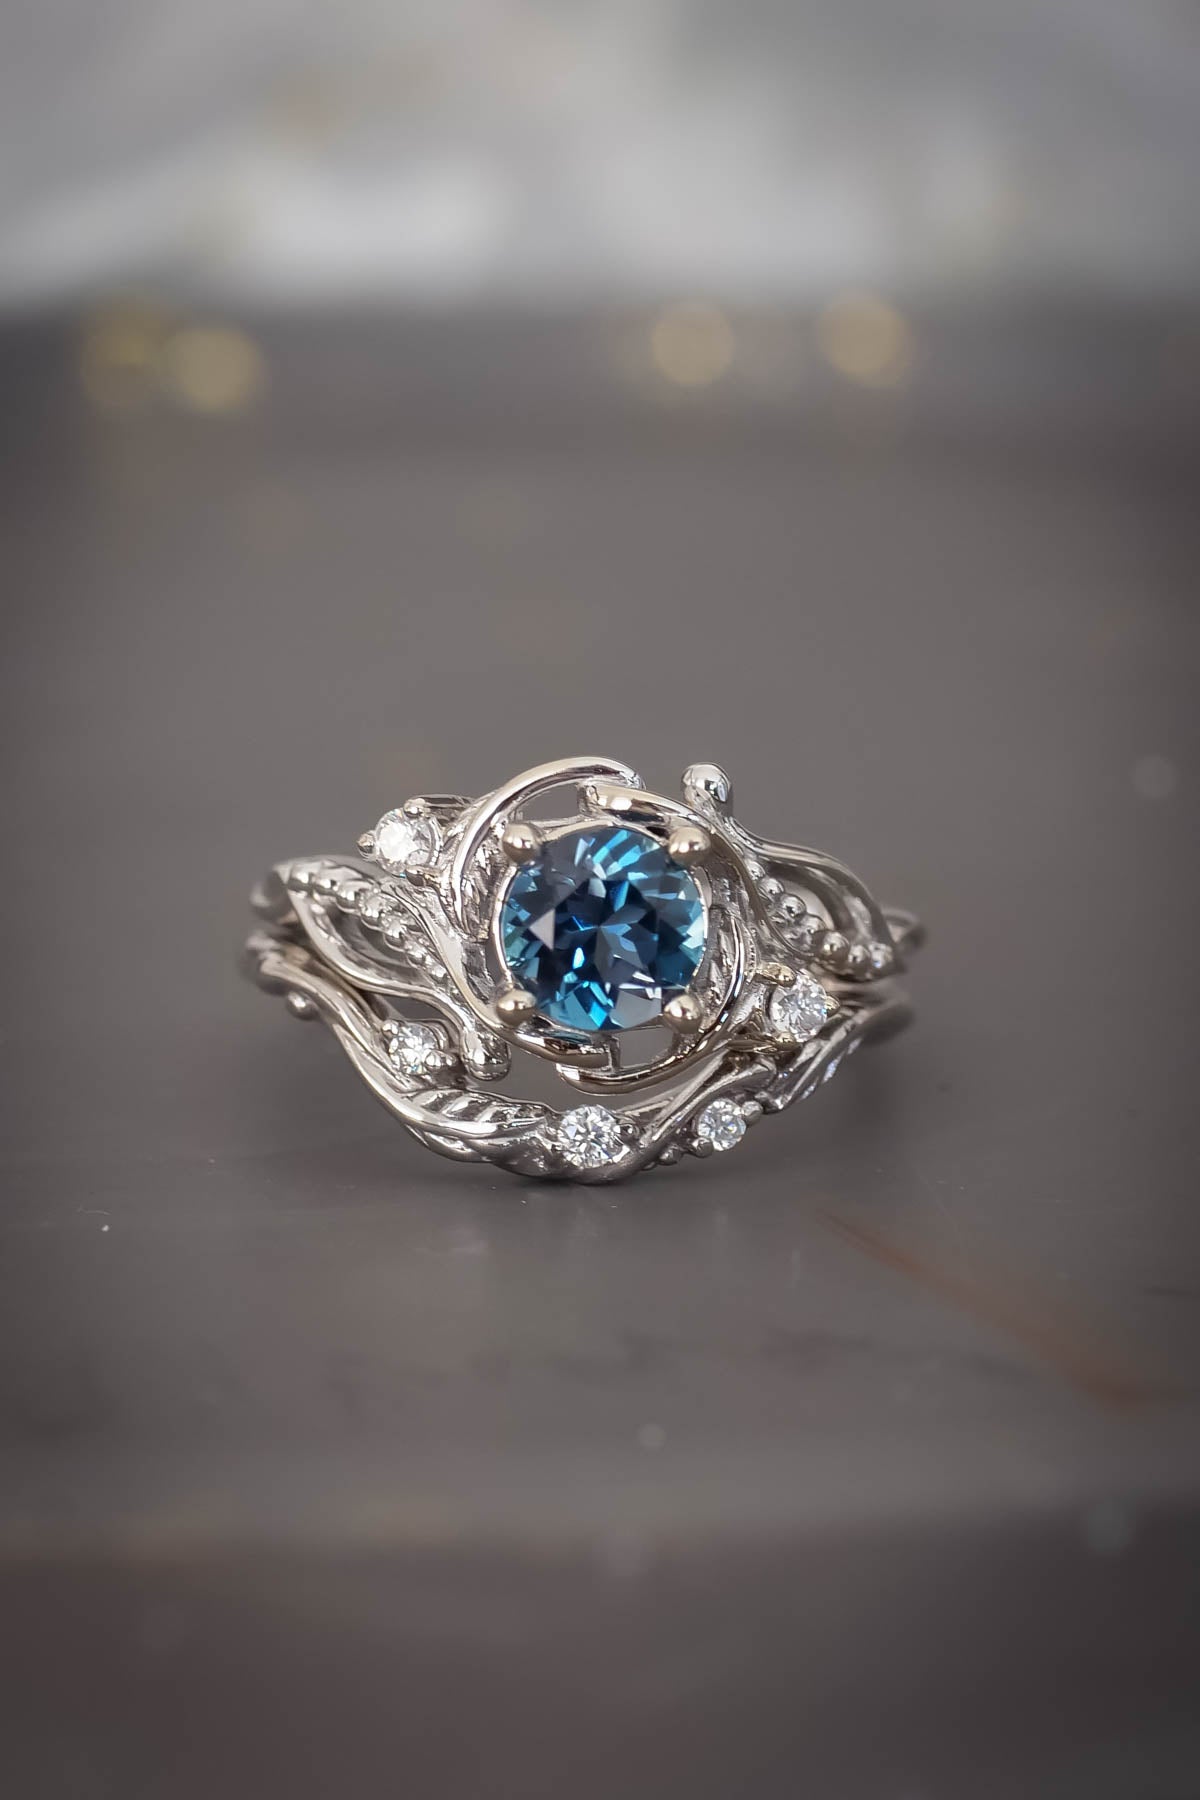 Blue topaz engagement ring, gold nature inspired ring / Undina - Eden Garden Jewelry™